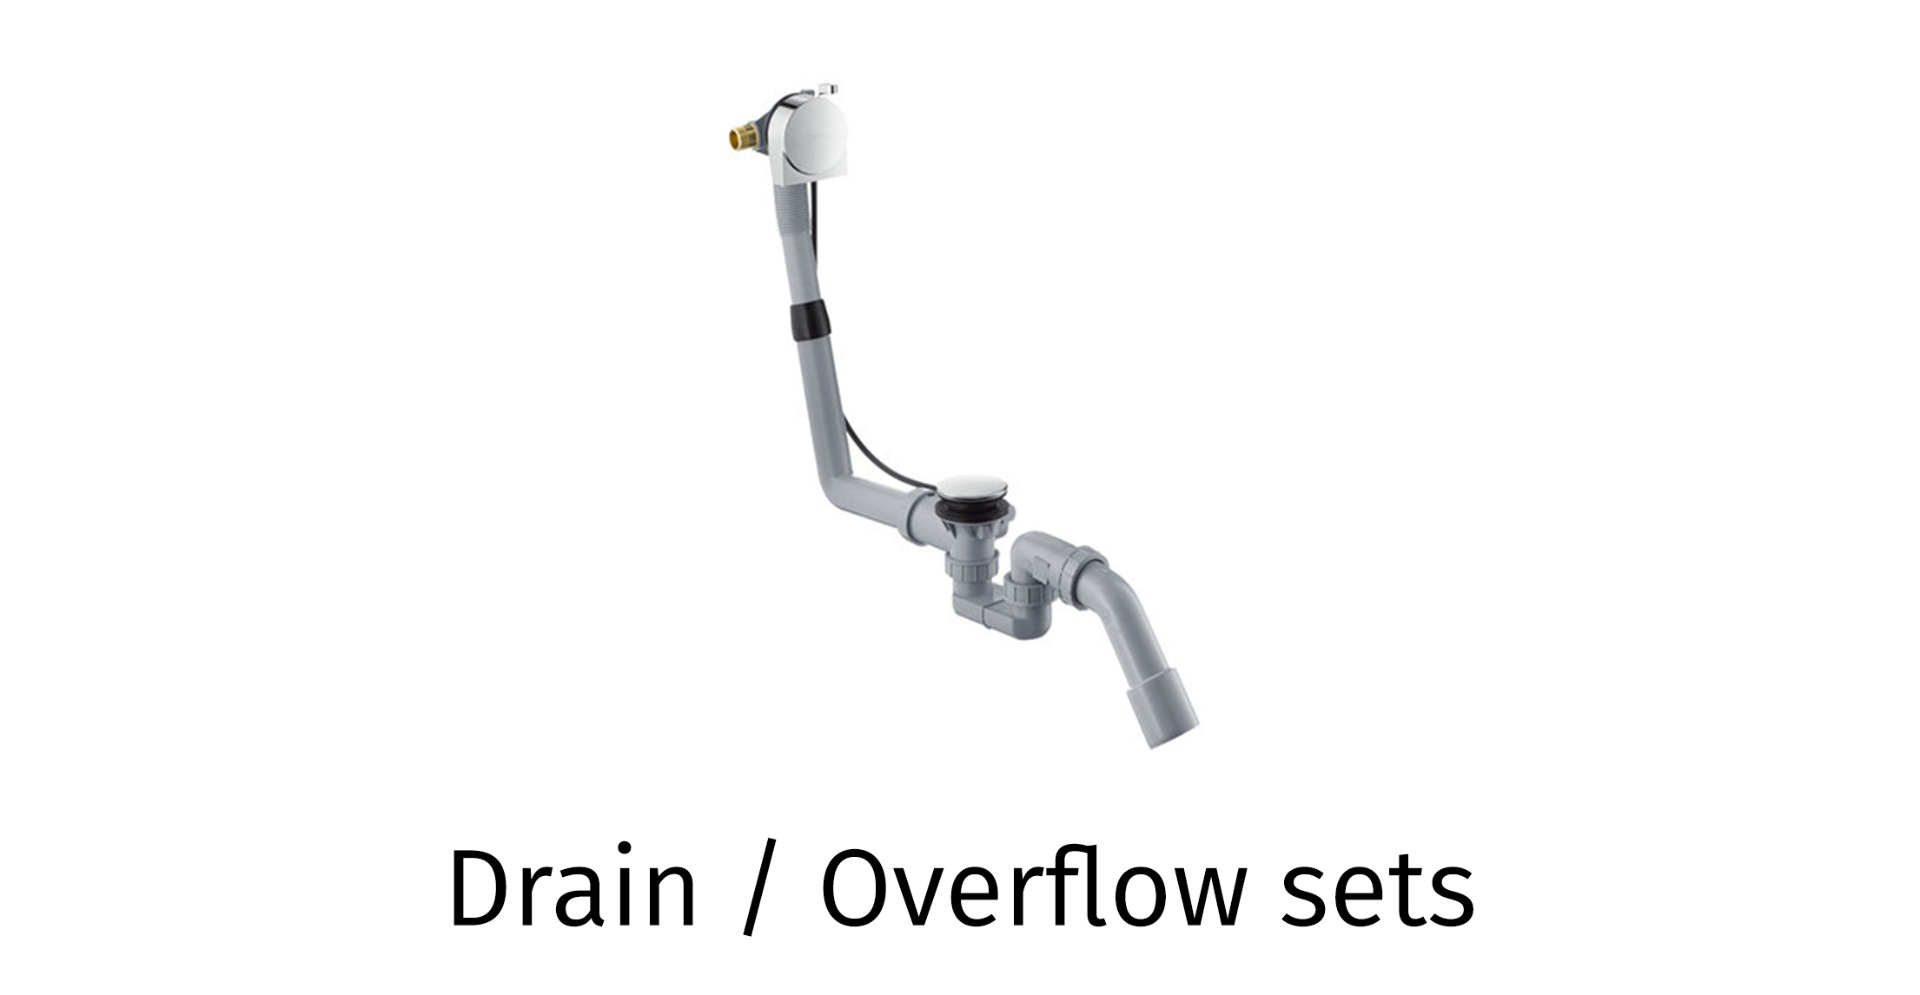 Drain / Overflow sets